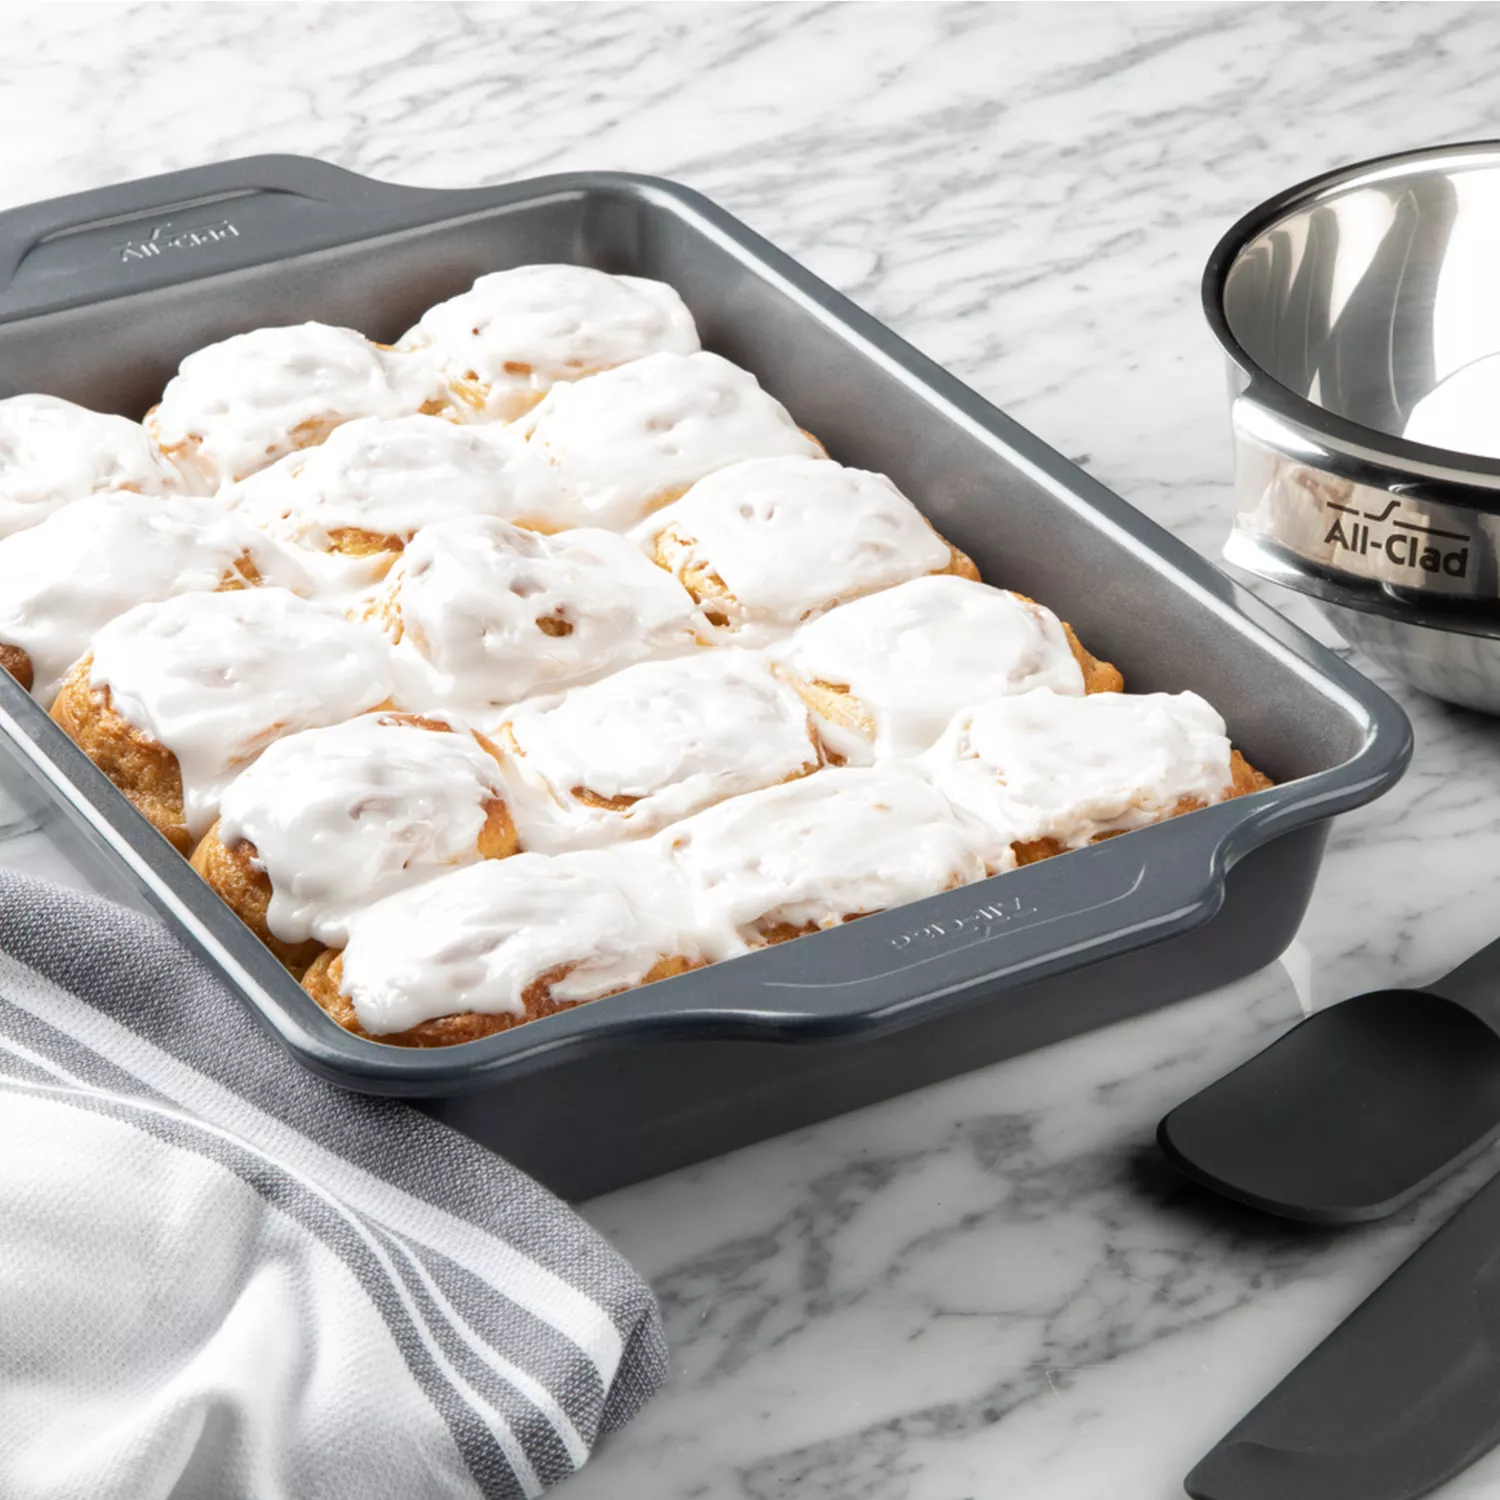 All-Clad Pro-Release Nonstick 3-Piece Bakeware Cookie Sheet Pan Set